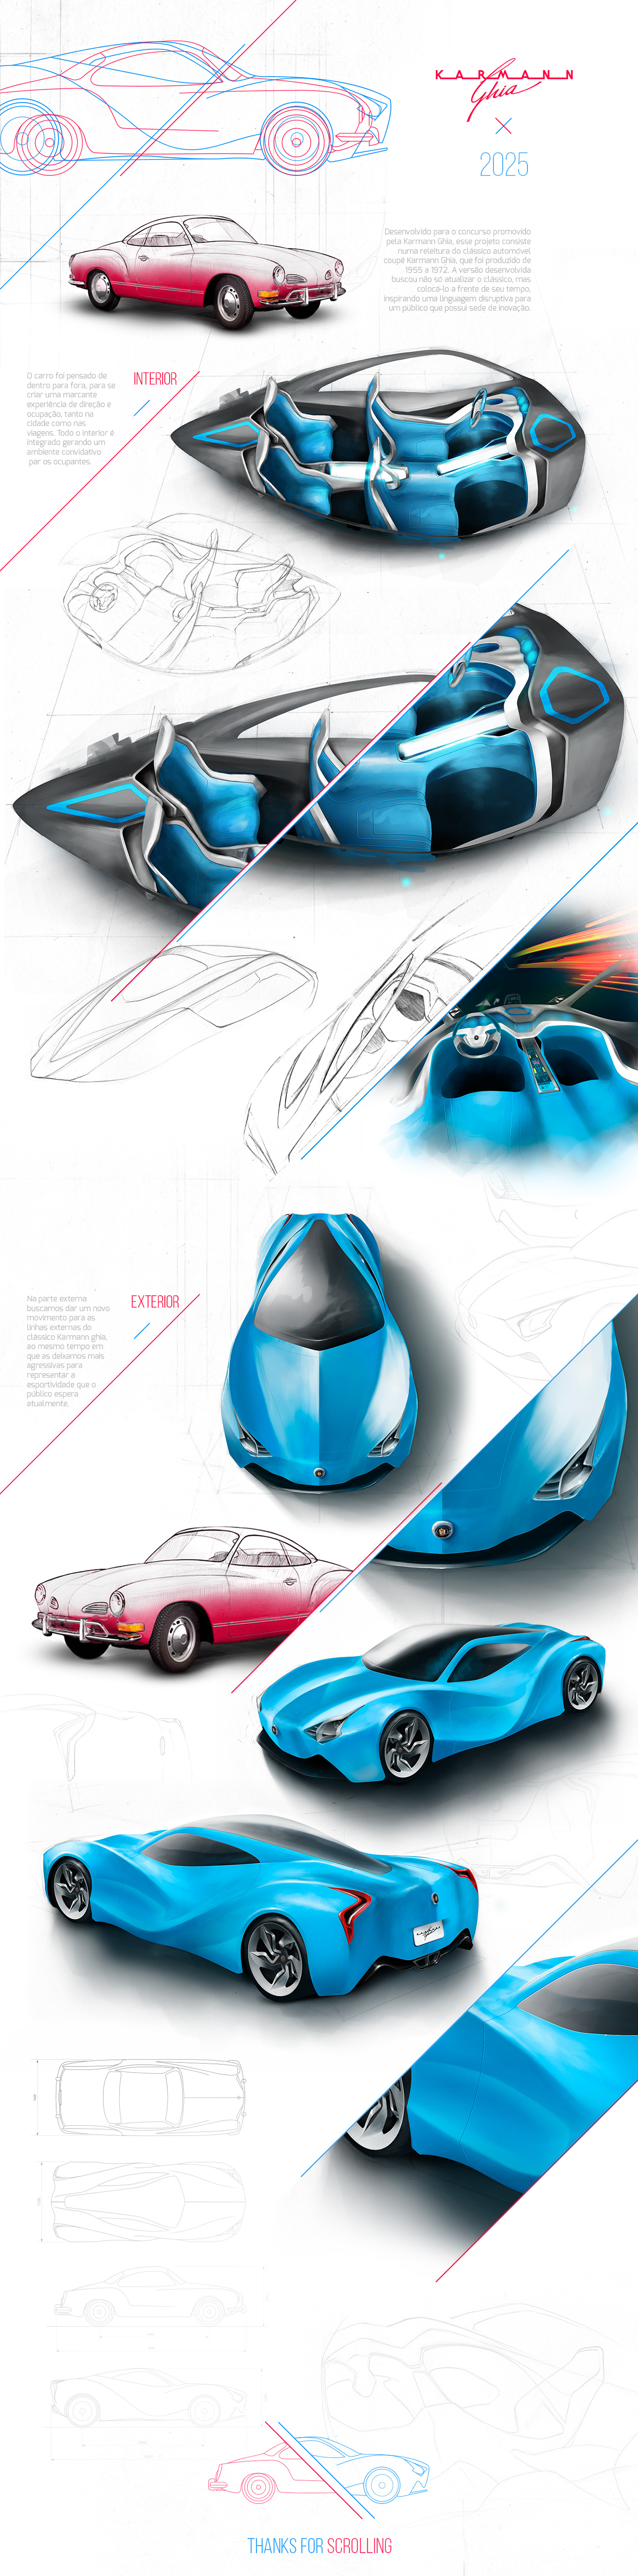 car Vehicle automotive   redesign karmann ghia design